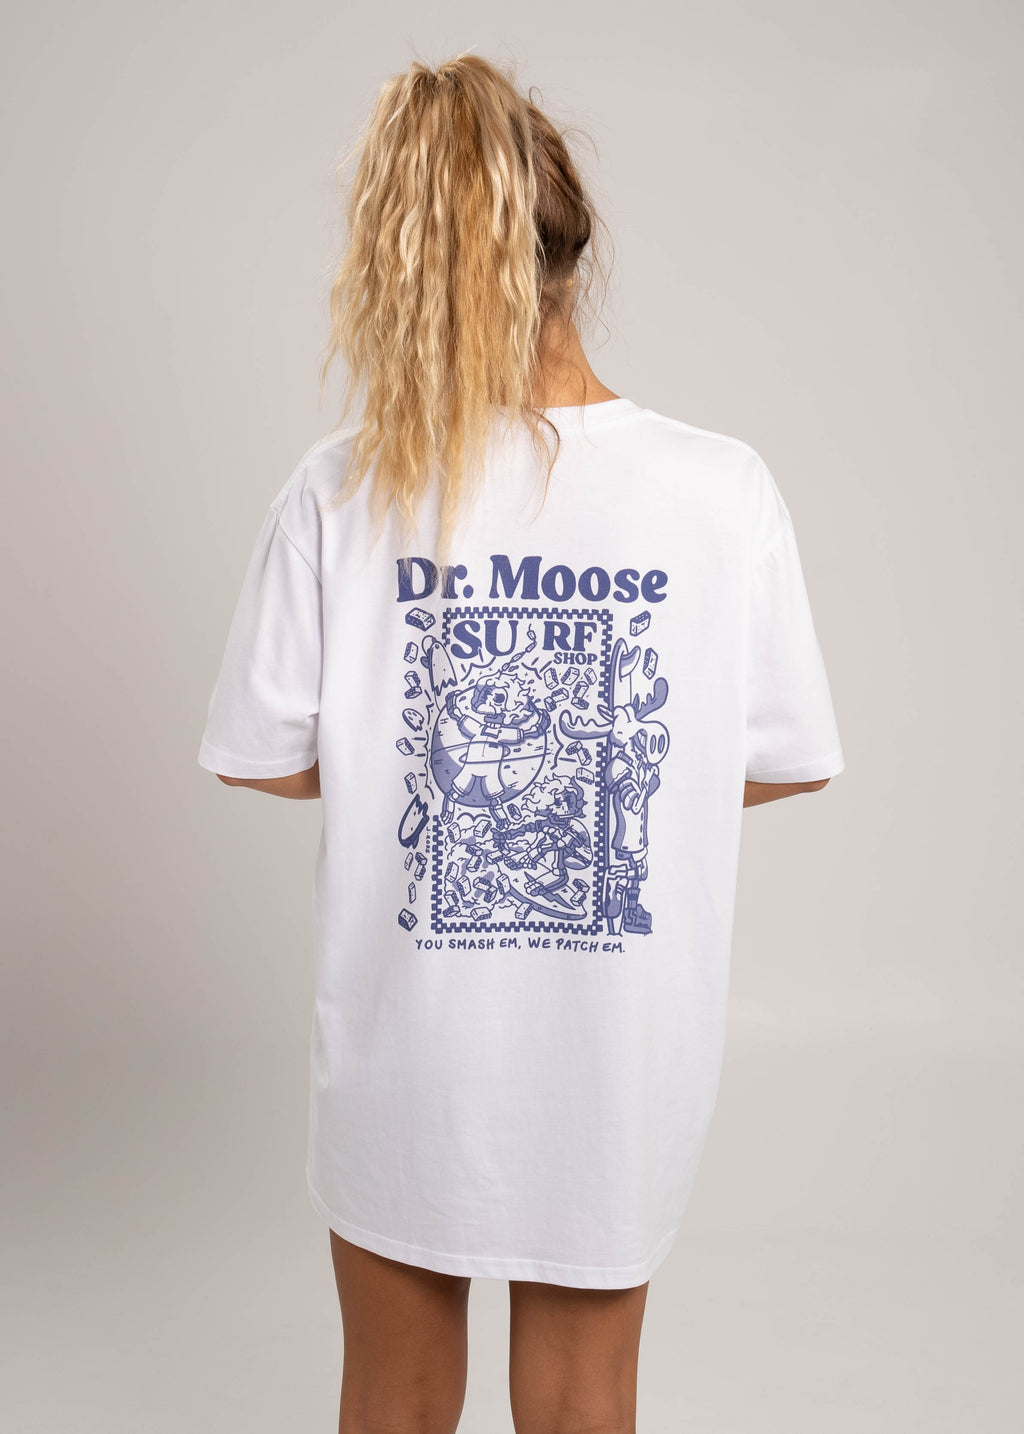 Dr.Moose Byron Bay Jake Ross Surf T-Shirt